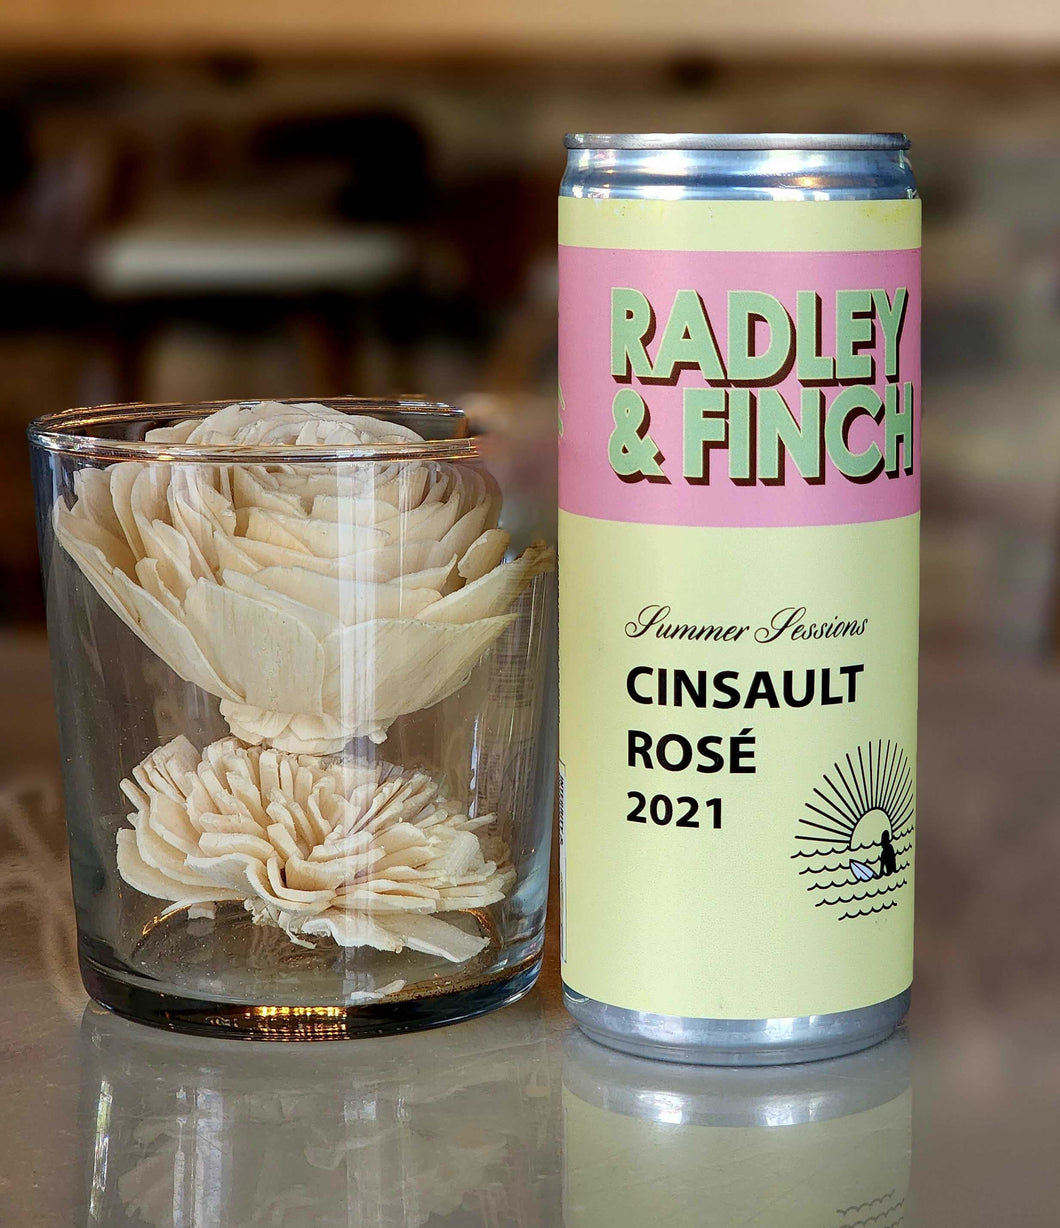 Radley & Finch Summer Sessions Cinsault Rosé 2021 (250ml can)